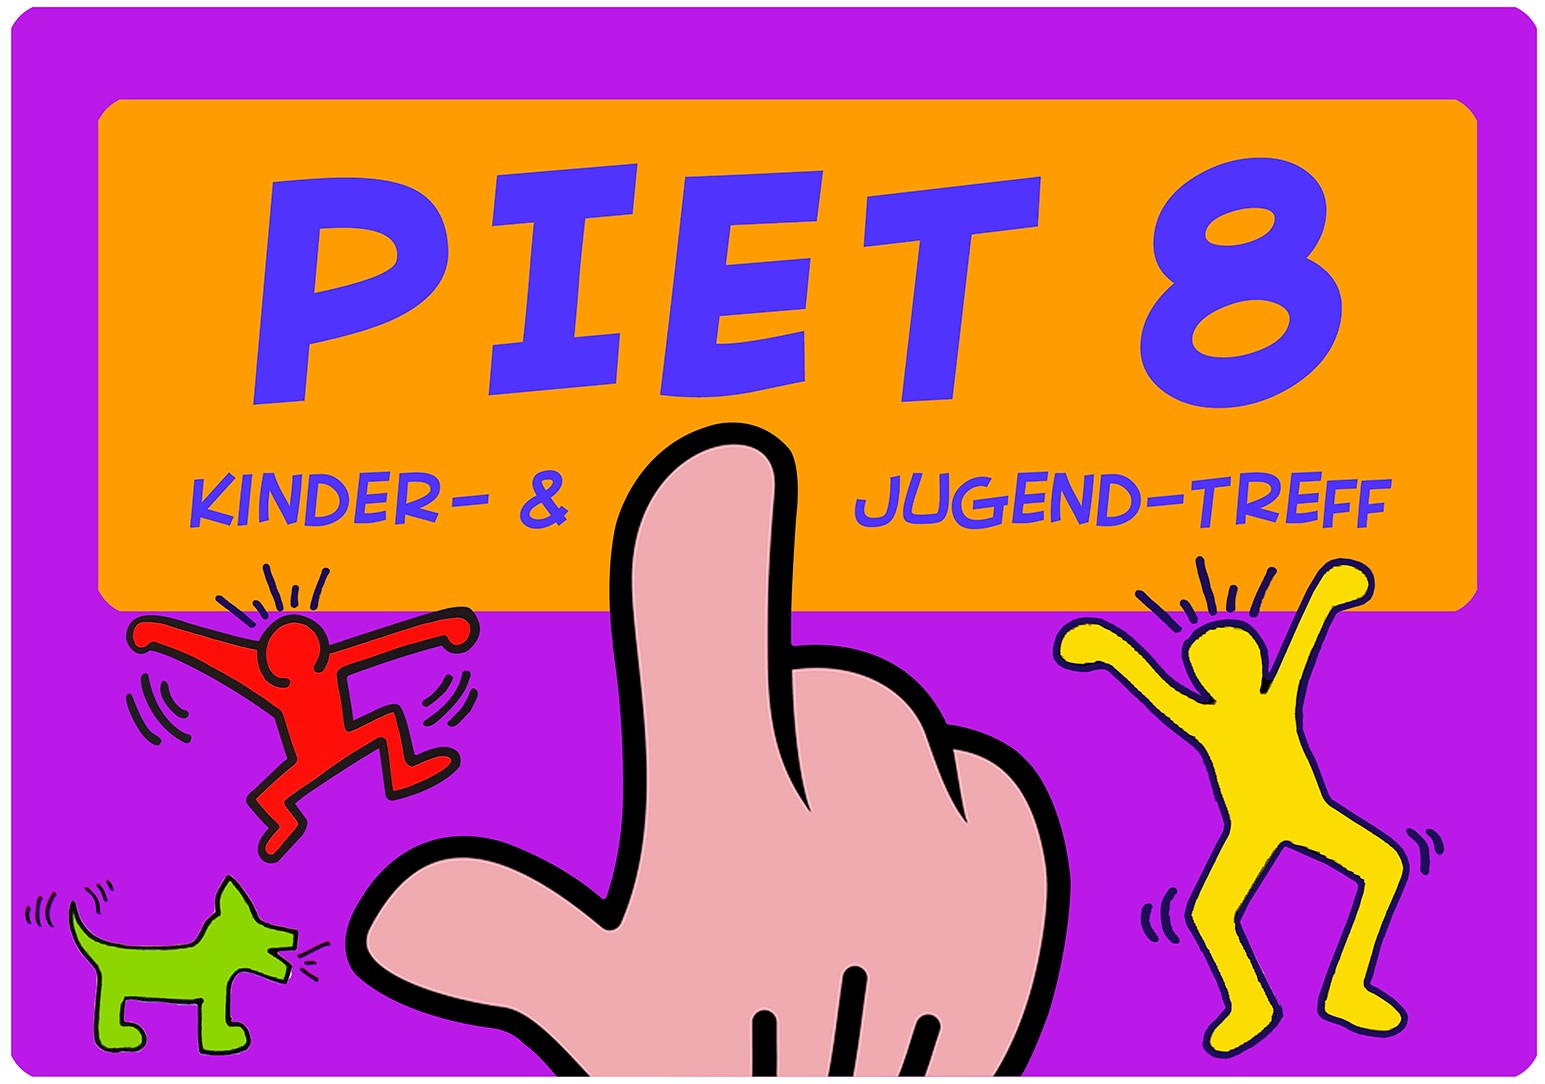 Piet 8